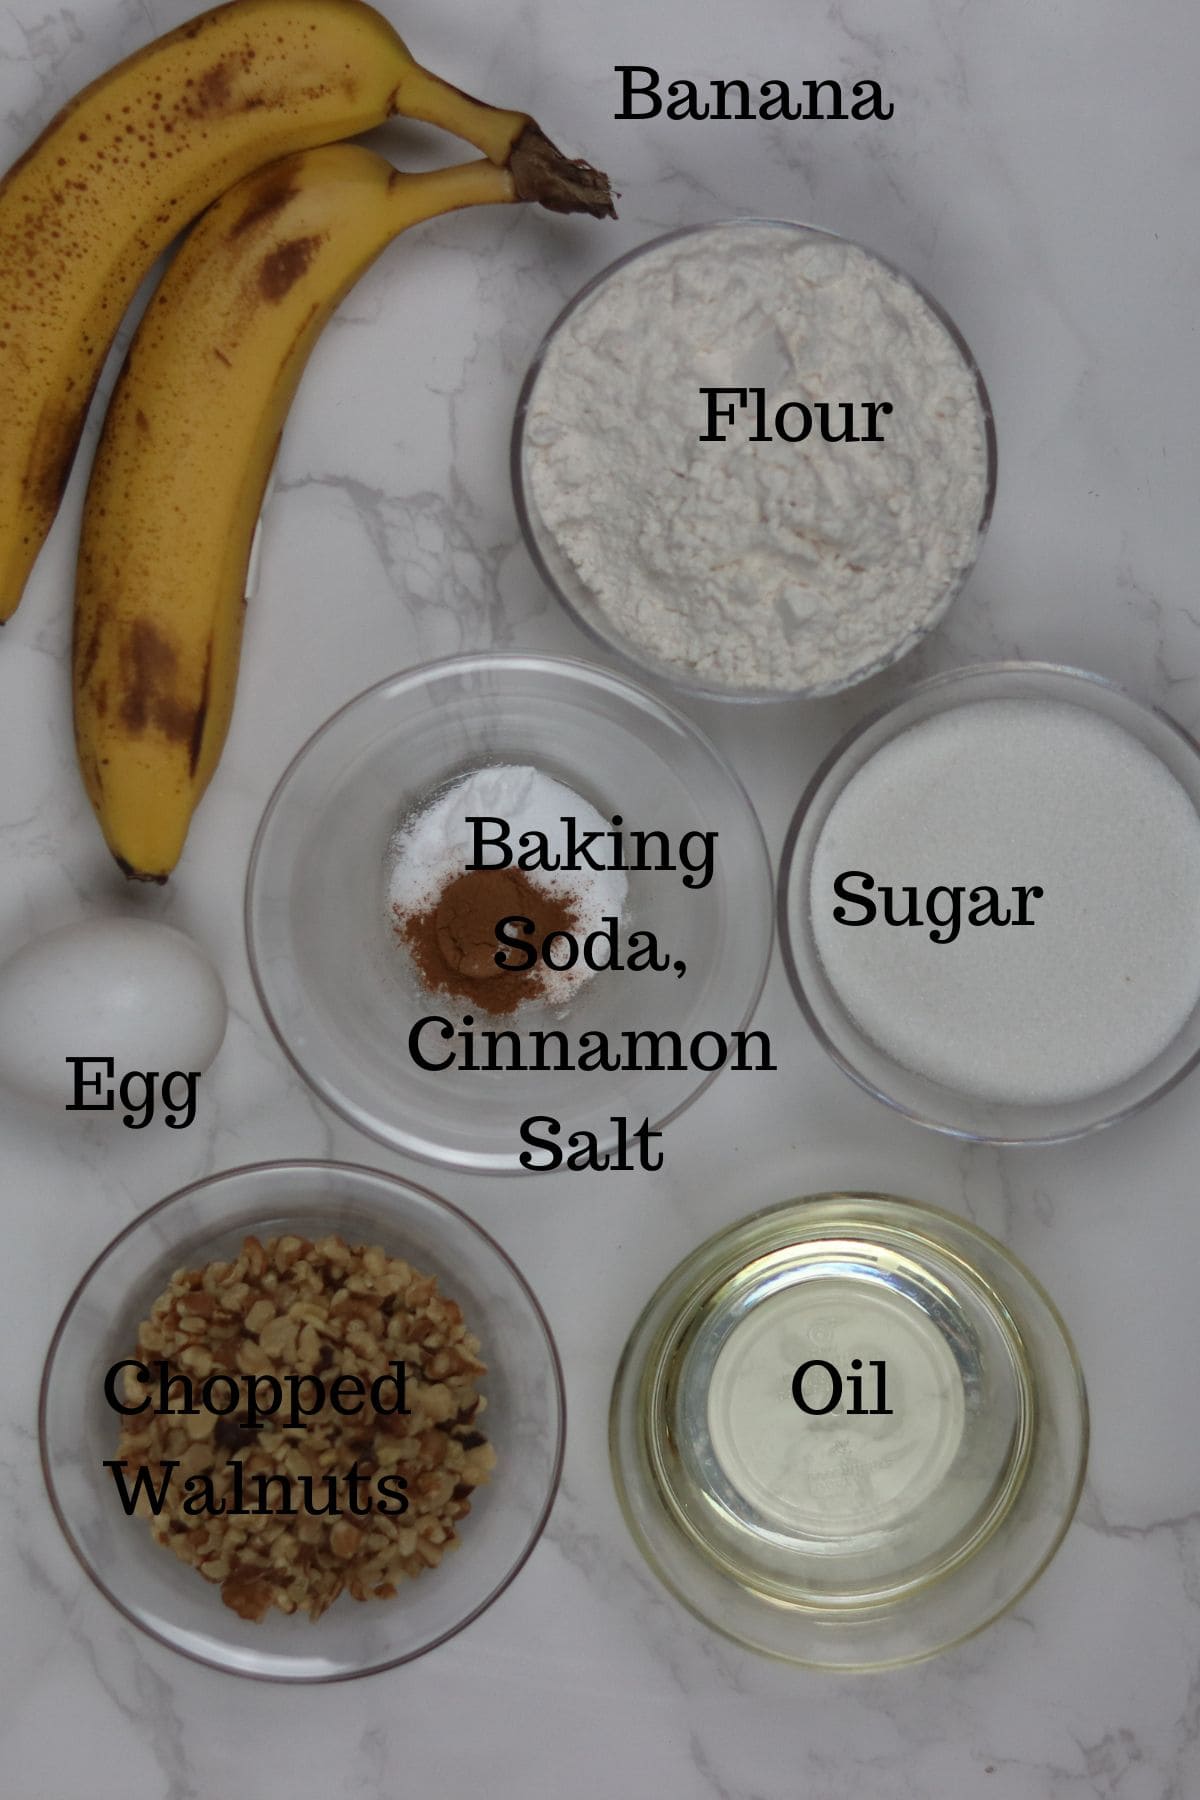 ingredients to make jumbo banana nut muffins